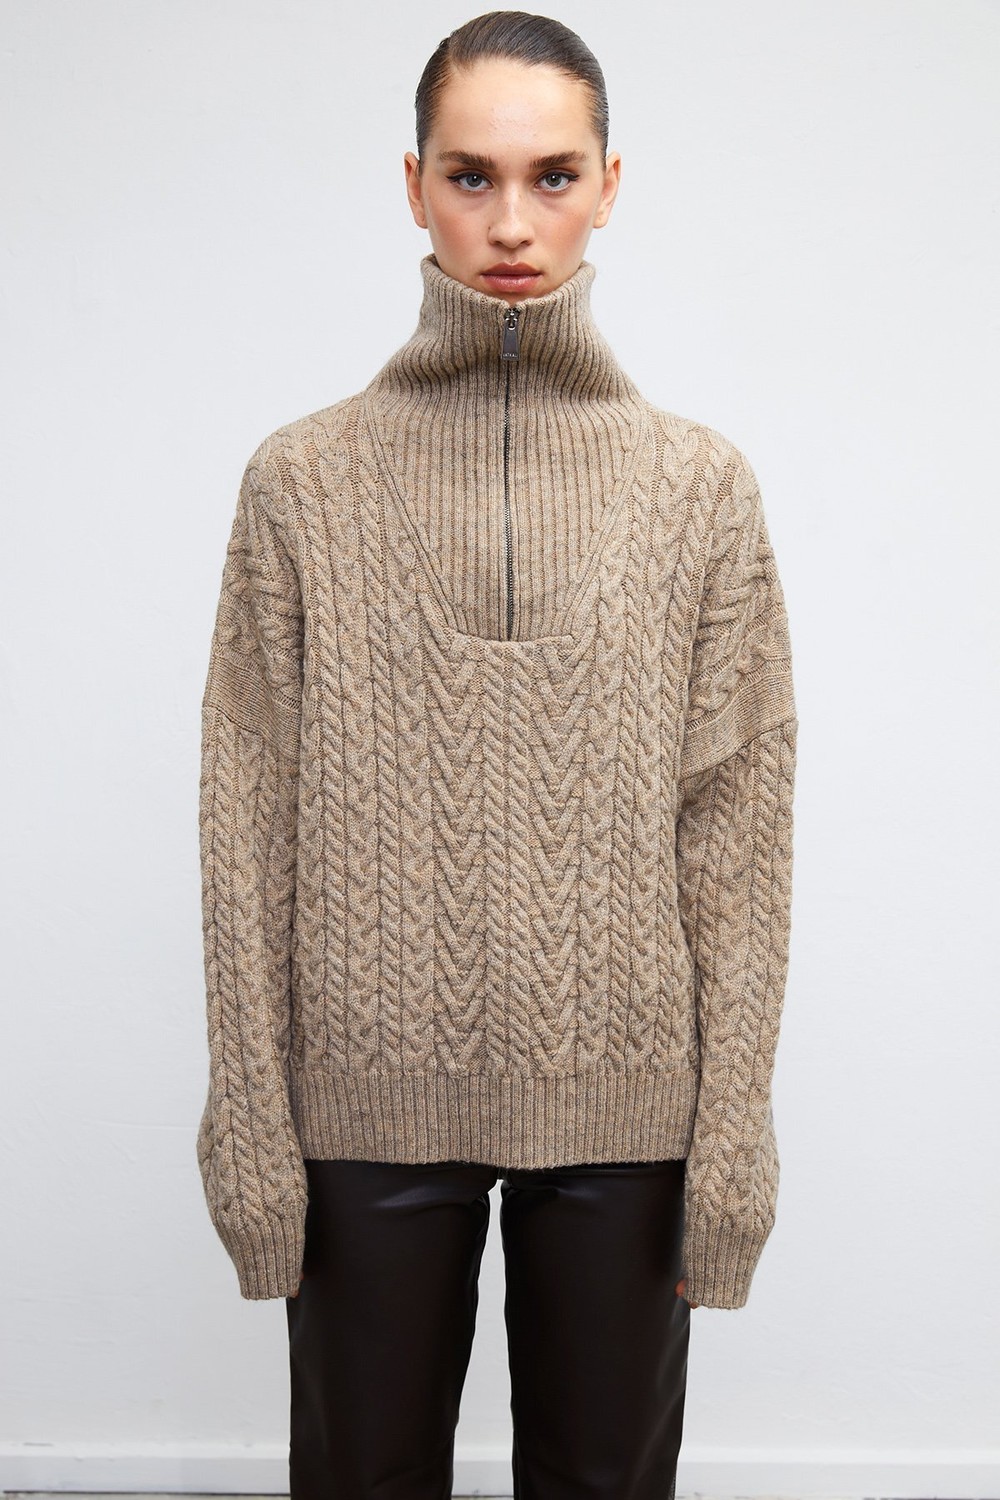 VATKALI Turtleneck Zipper Knit Sweater